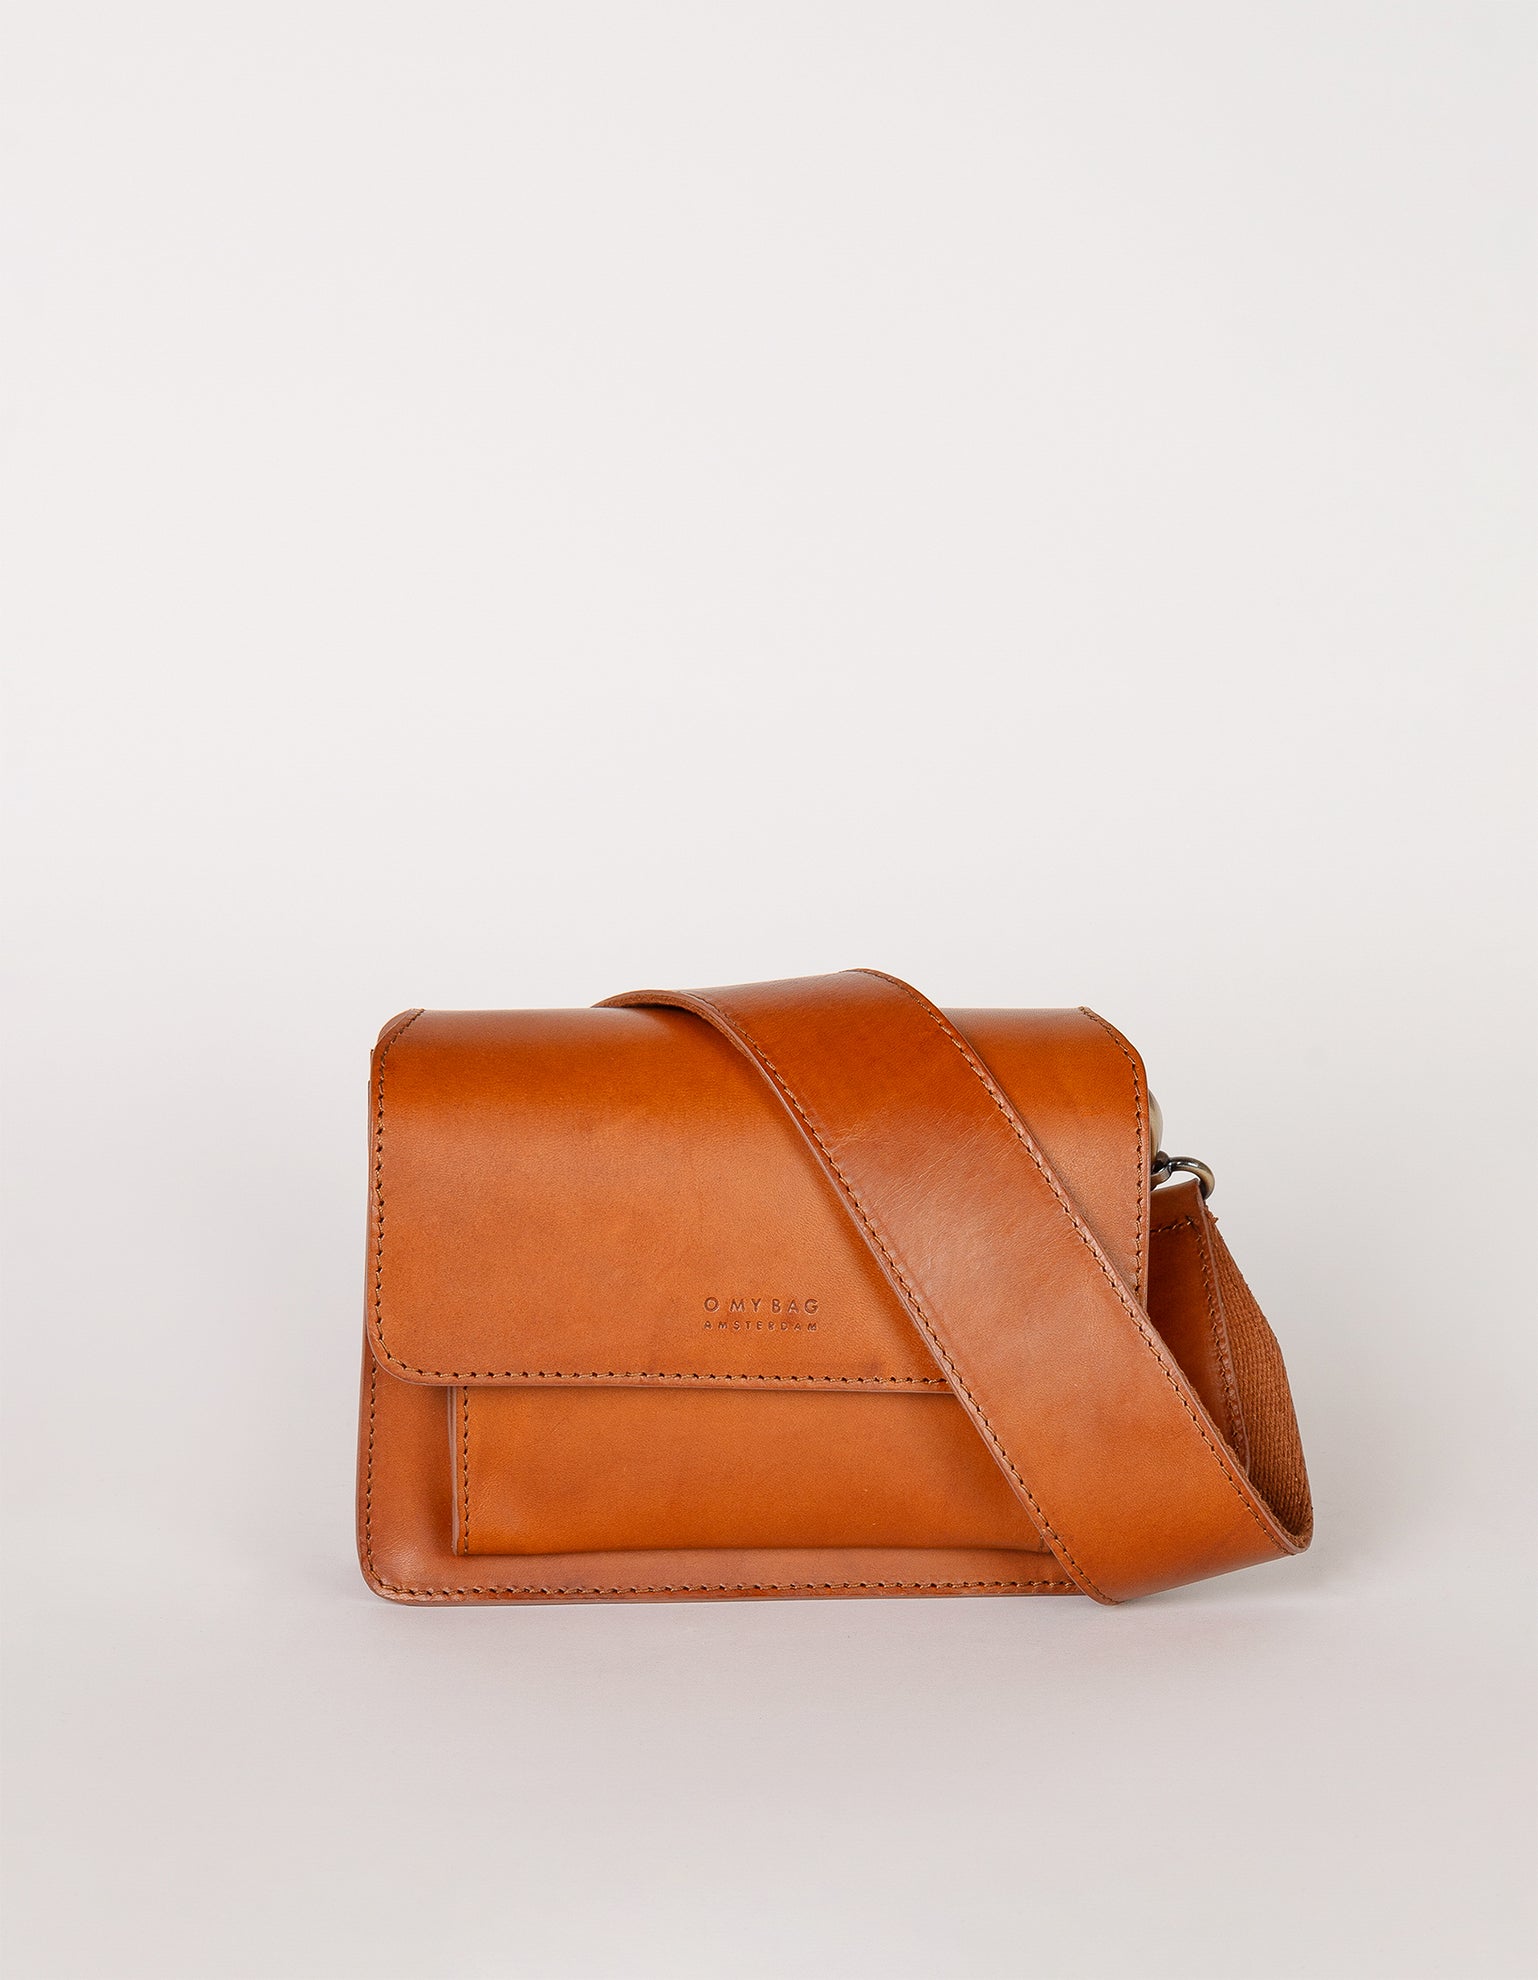 Harper Mini Cognac Leather crossbody handbag. Front product image